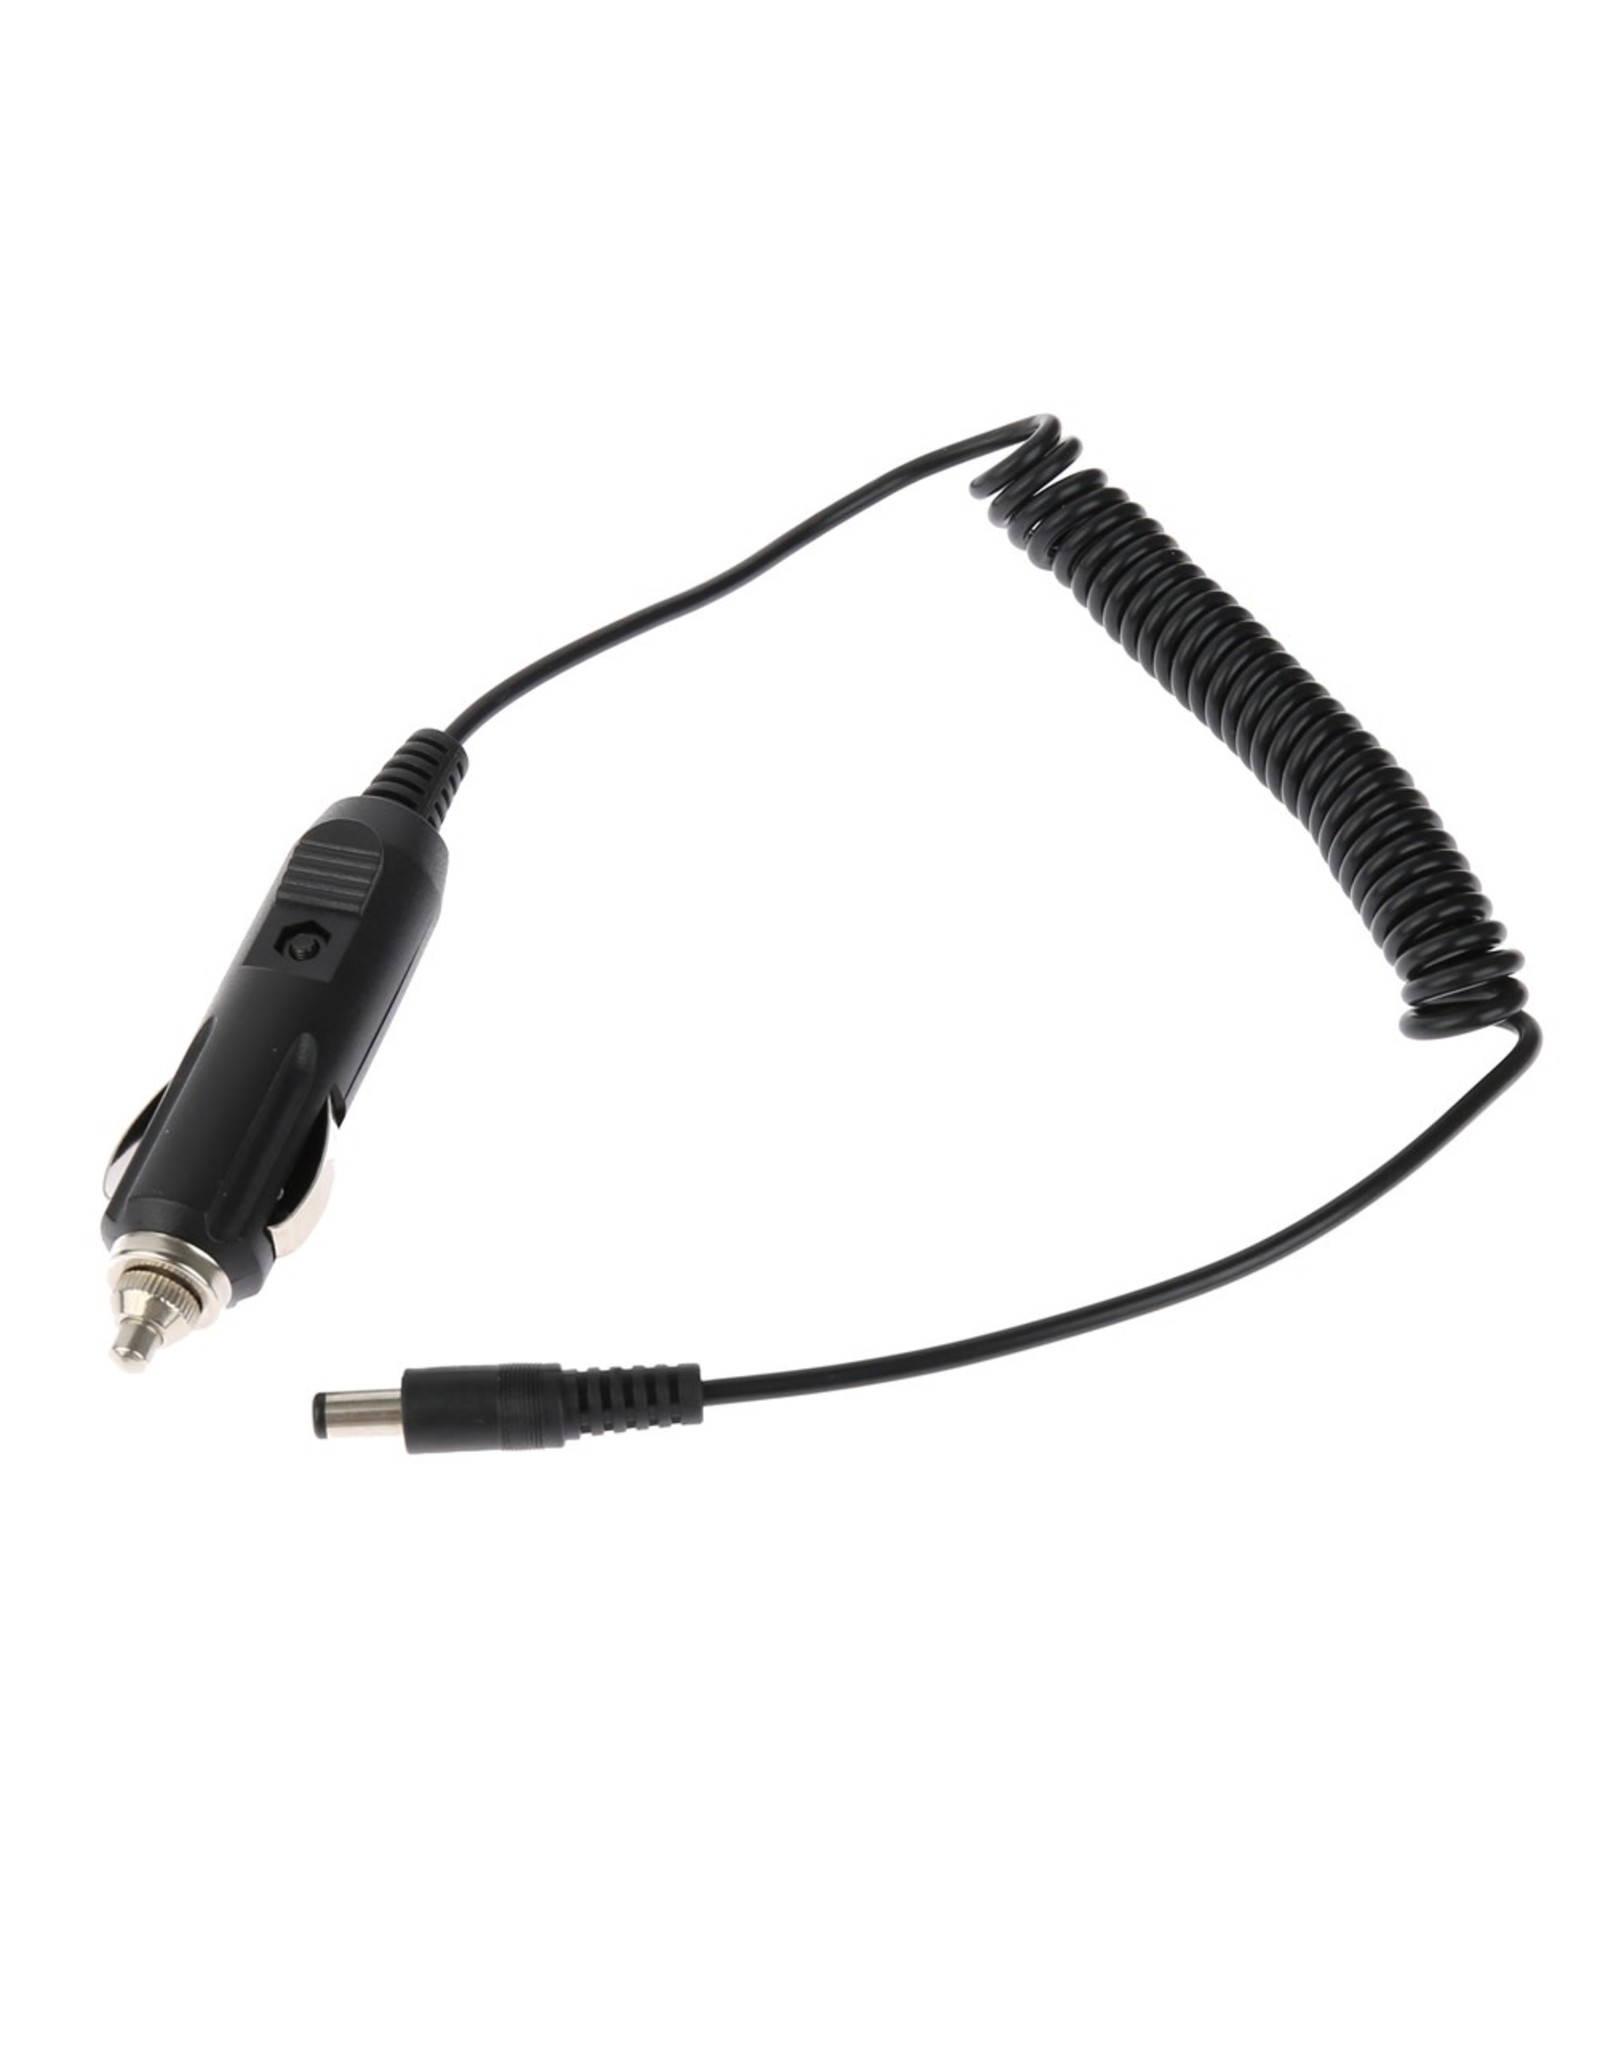 Pegasus Astro Pegasus Astro DC Cable (2.1m) to Cigarette Lighter (8A Fused) (Replacement)